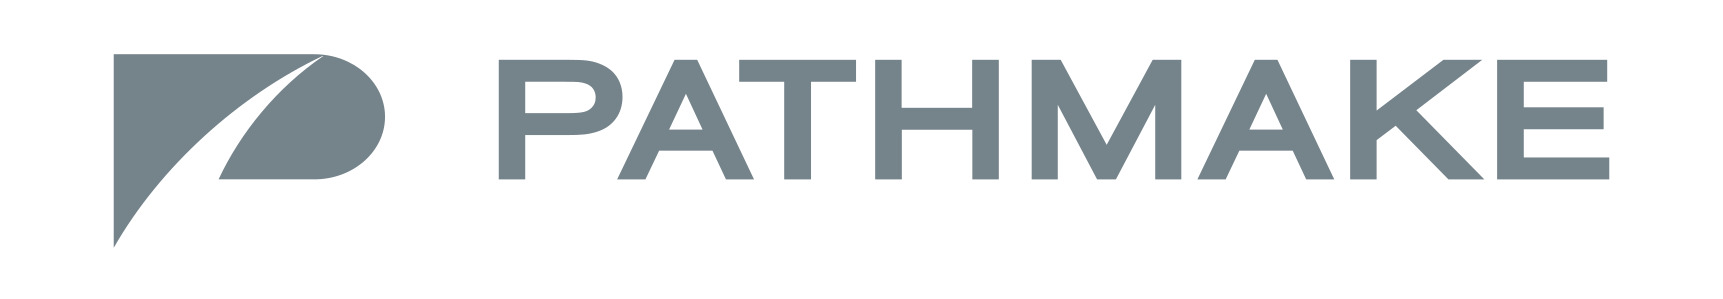 Pathmake Holdings Co., Ltd. 